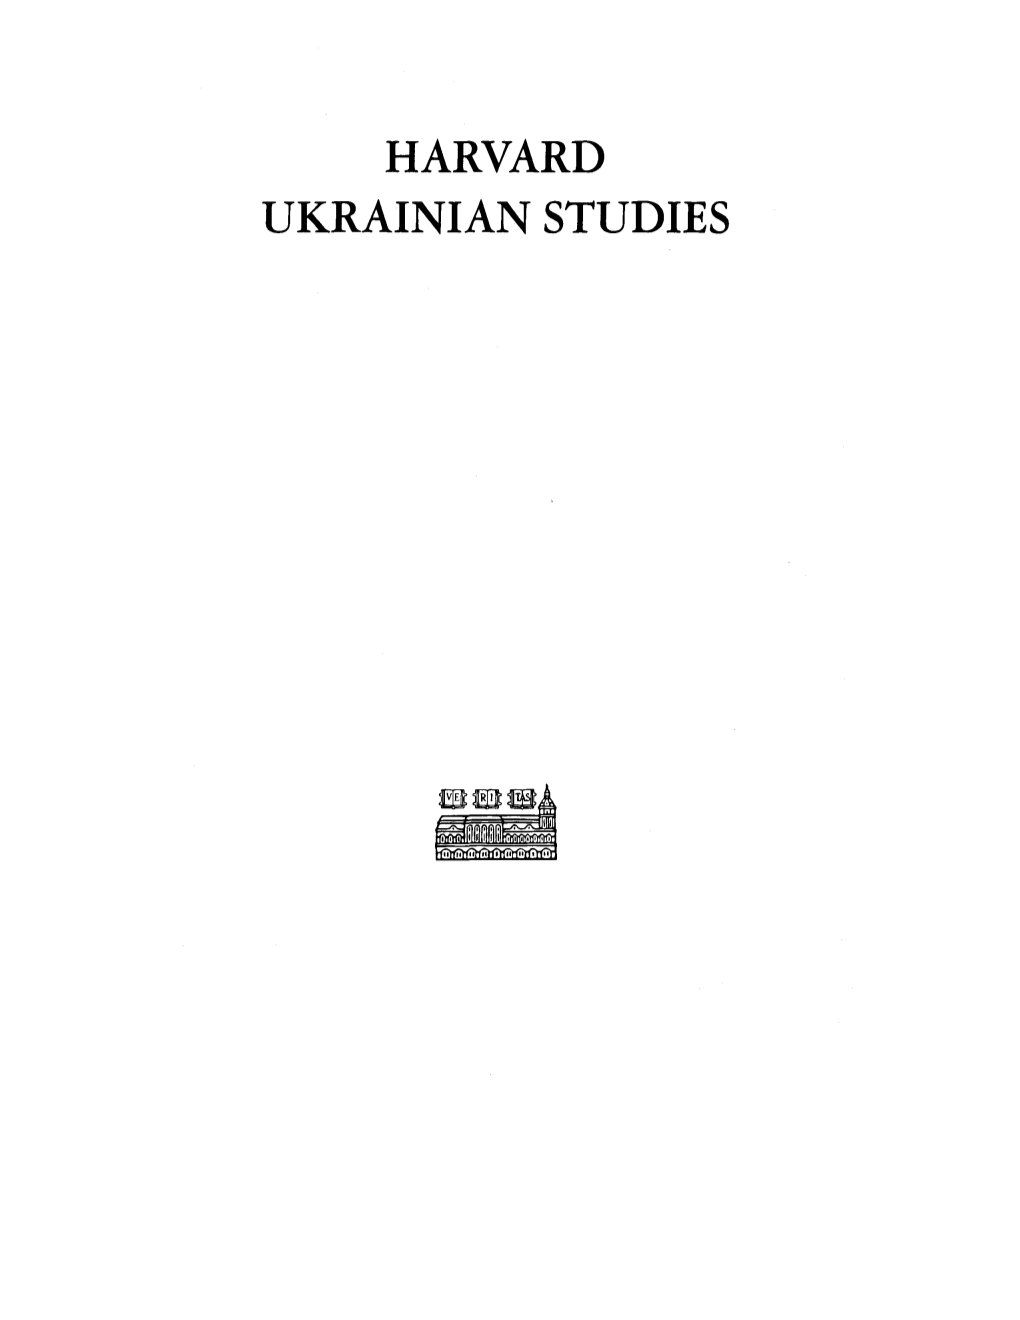 HARVARD UKRAINIAN STUDIES EDITOR Lubomyr Hajda, Harvard University